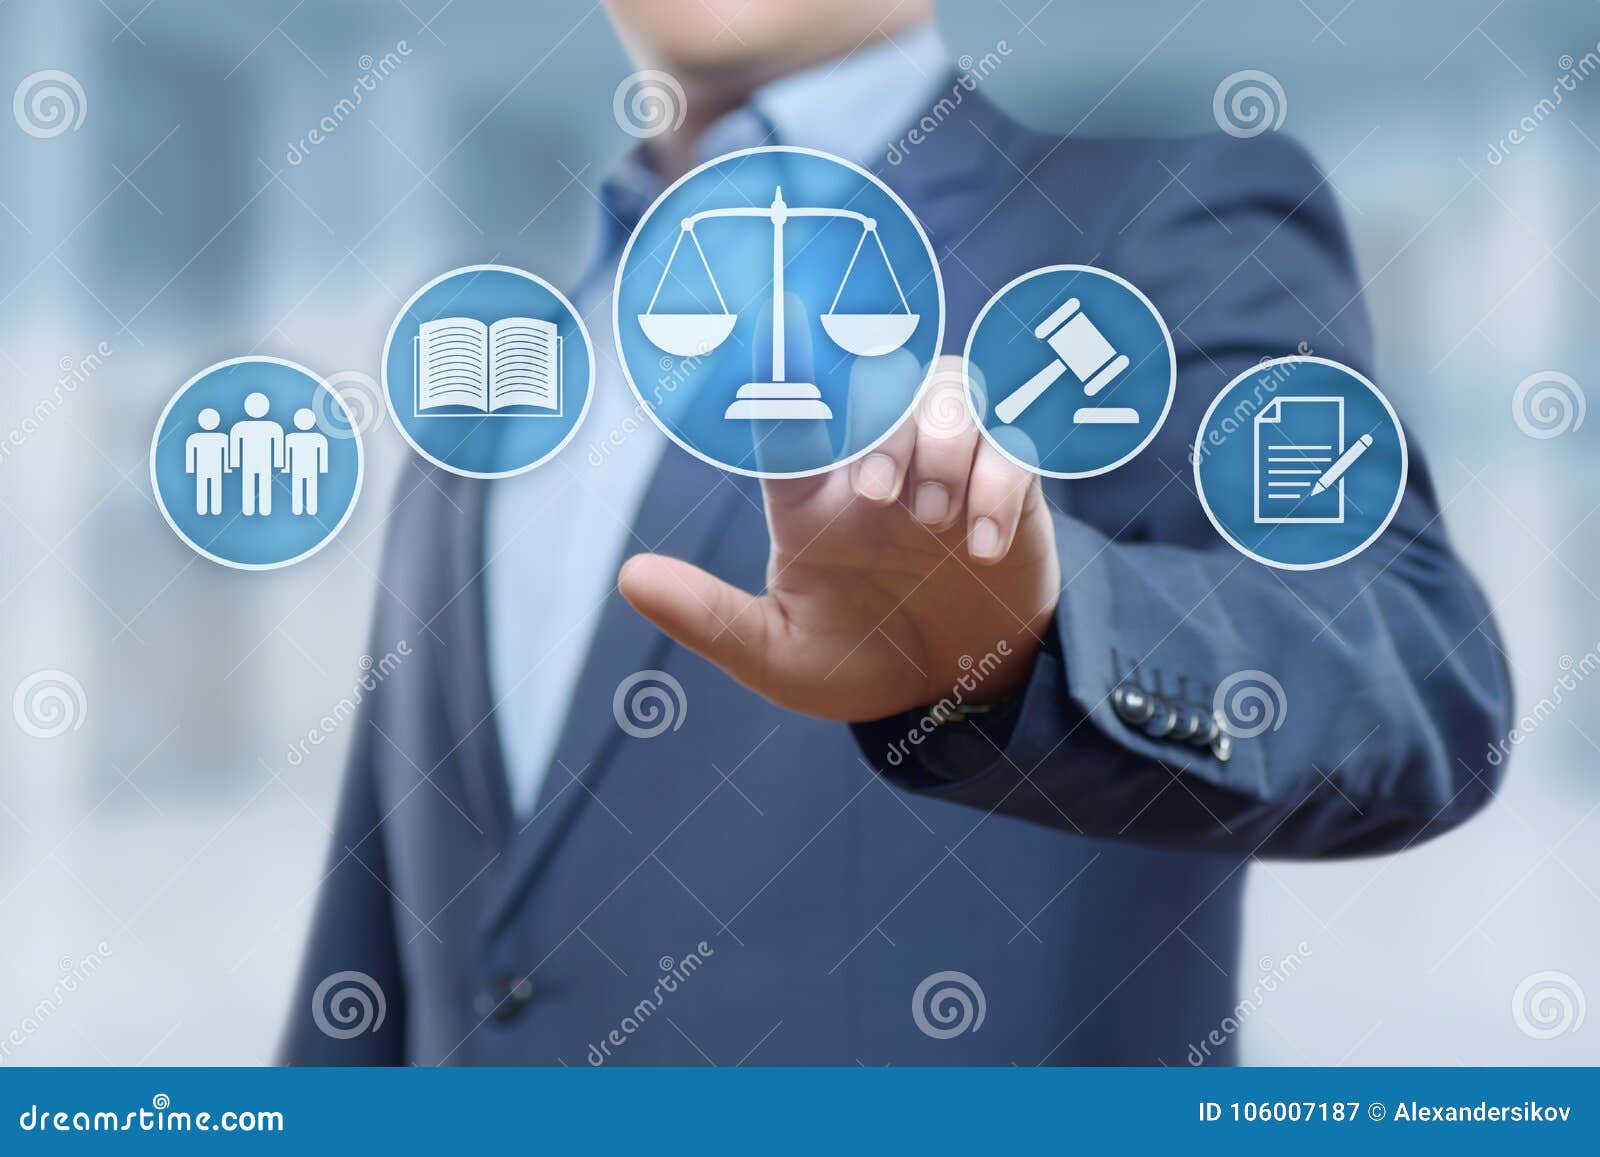 labor law lawyer legal business internet technology concept